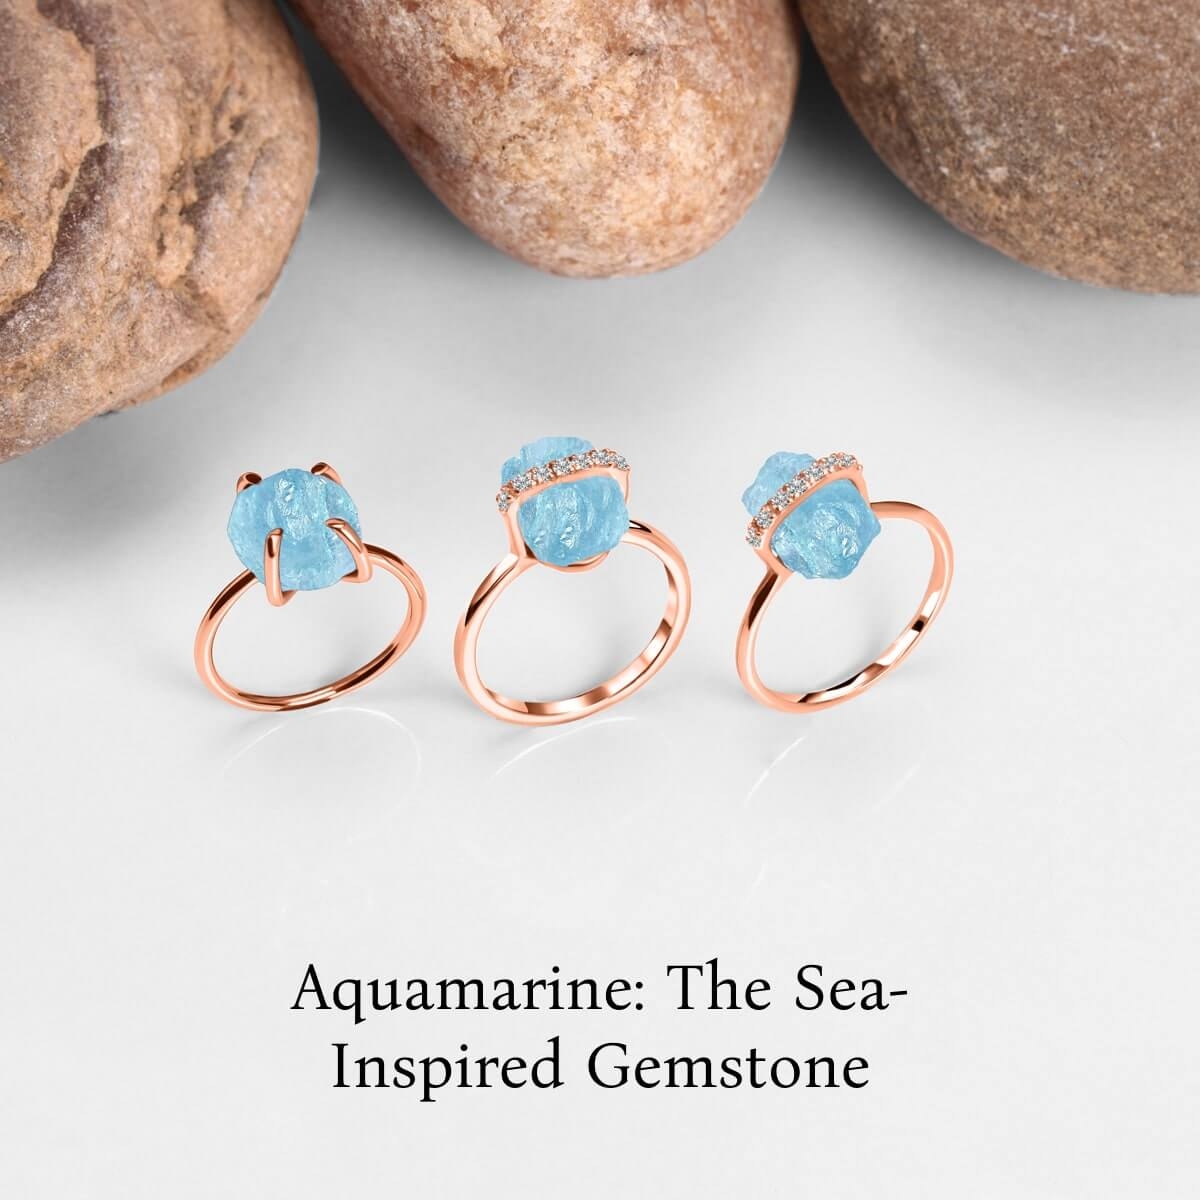 Aquamarine: The Sea-Inspired Gemstone